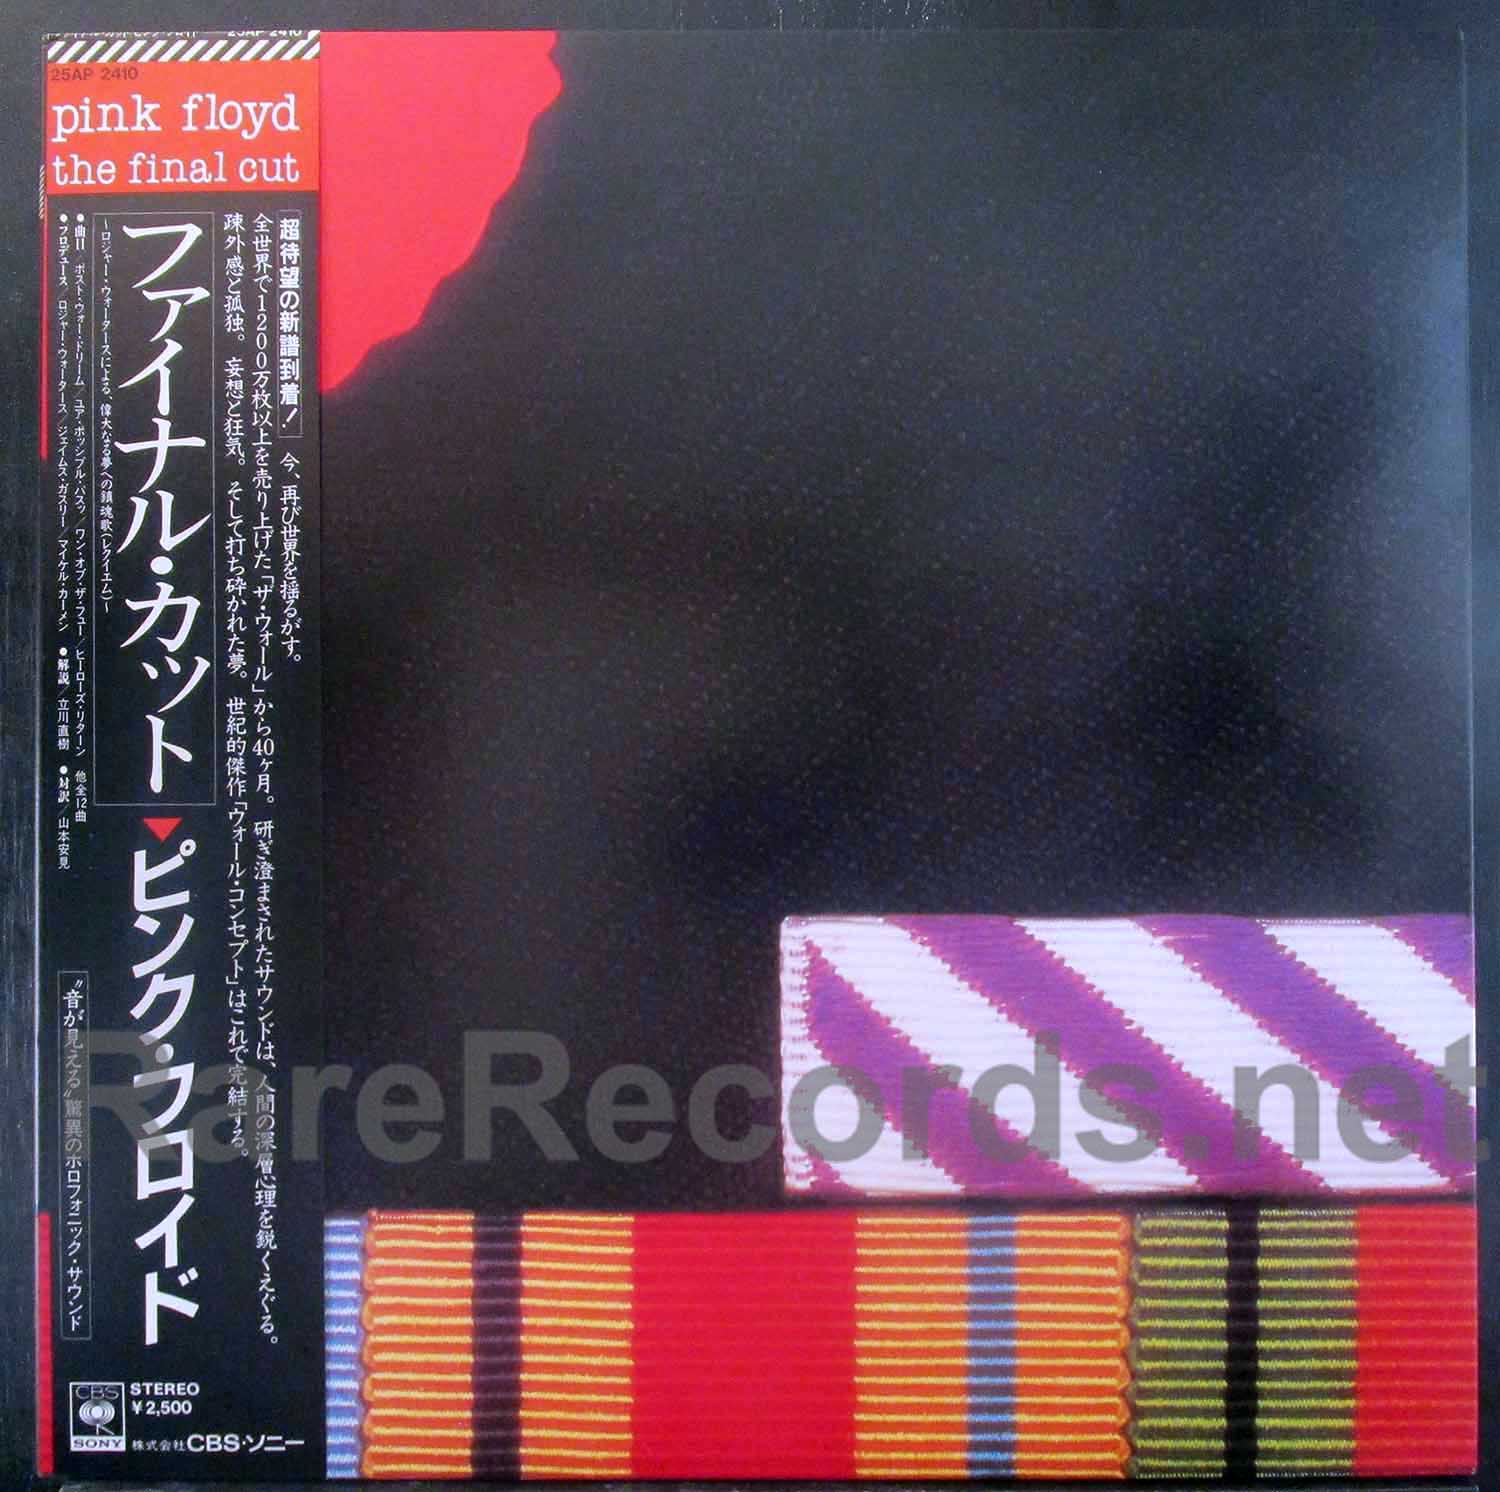 Pink Floyd - The Final Cut 1983 Japan LP with obi